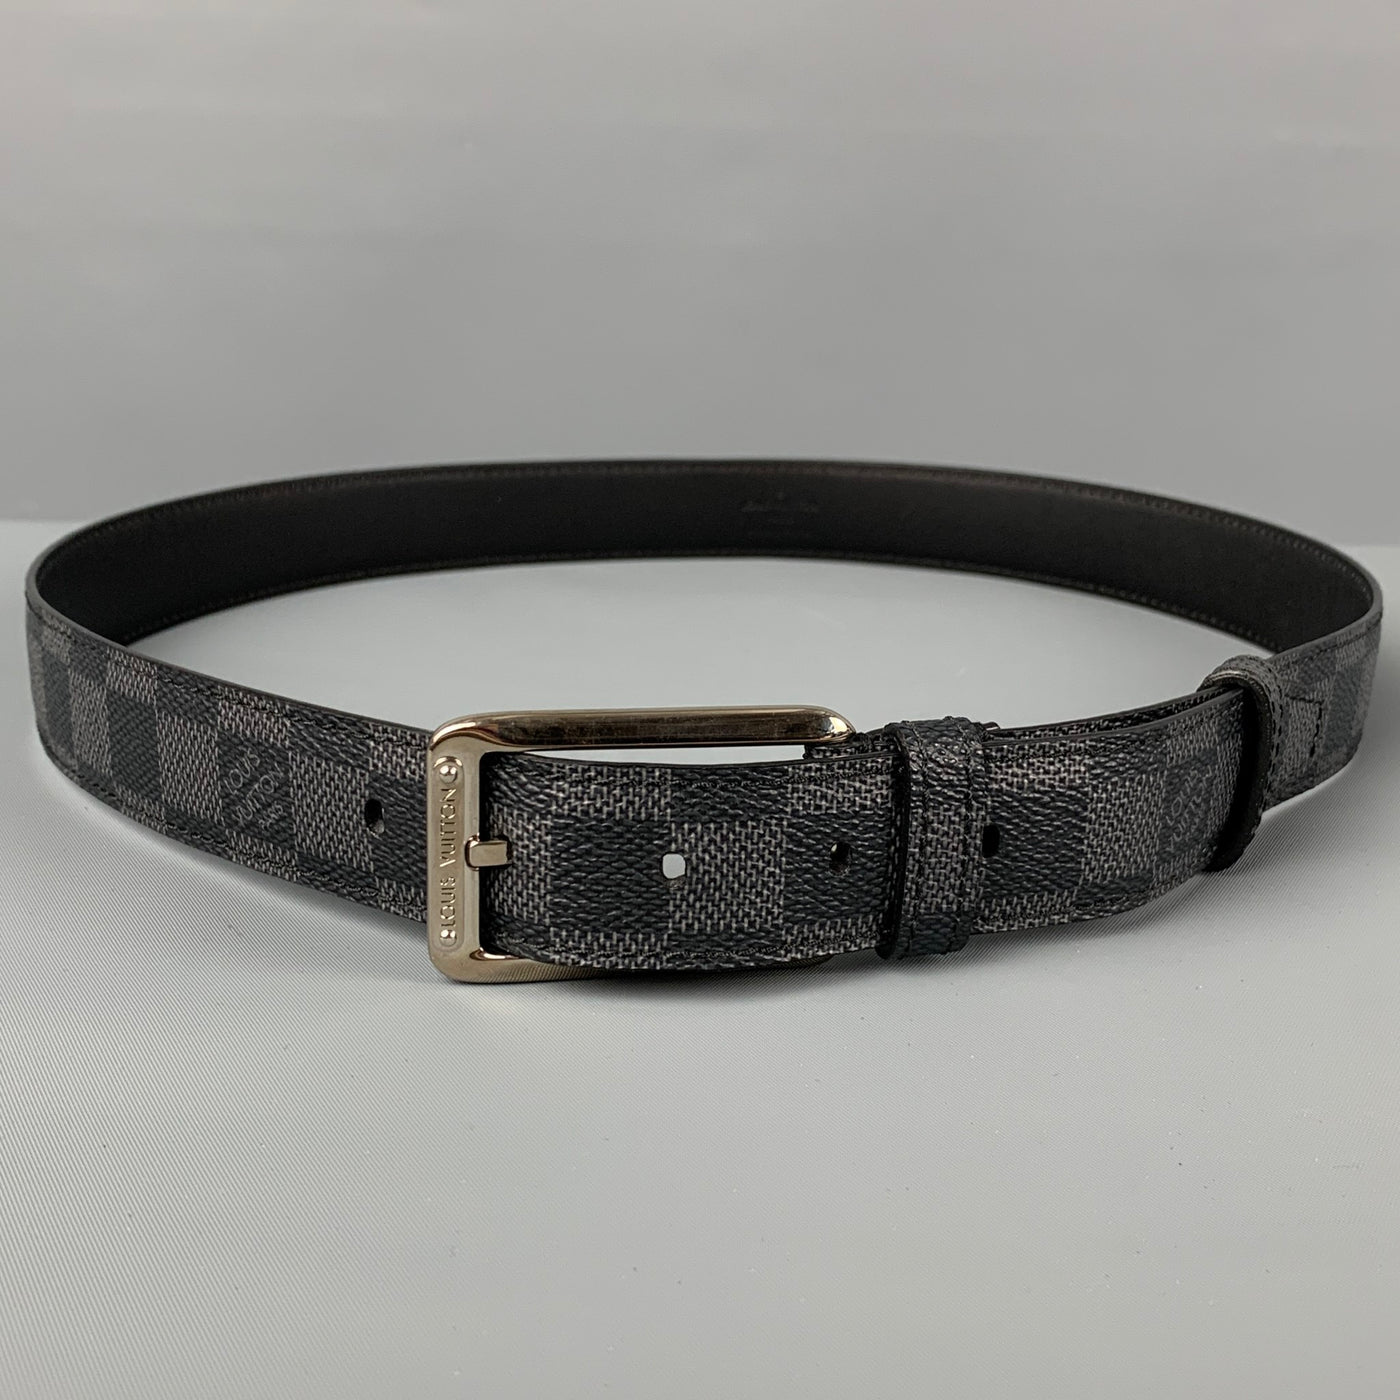 Louis Vuitton Belt Mens Size 36 Silver Buckle - New with Original